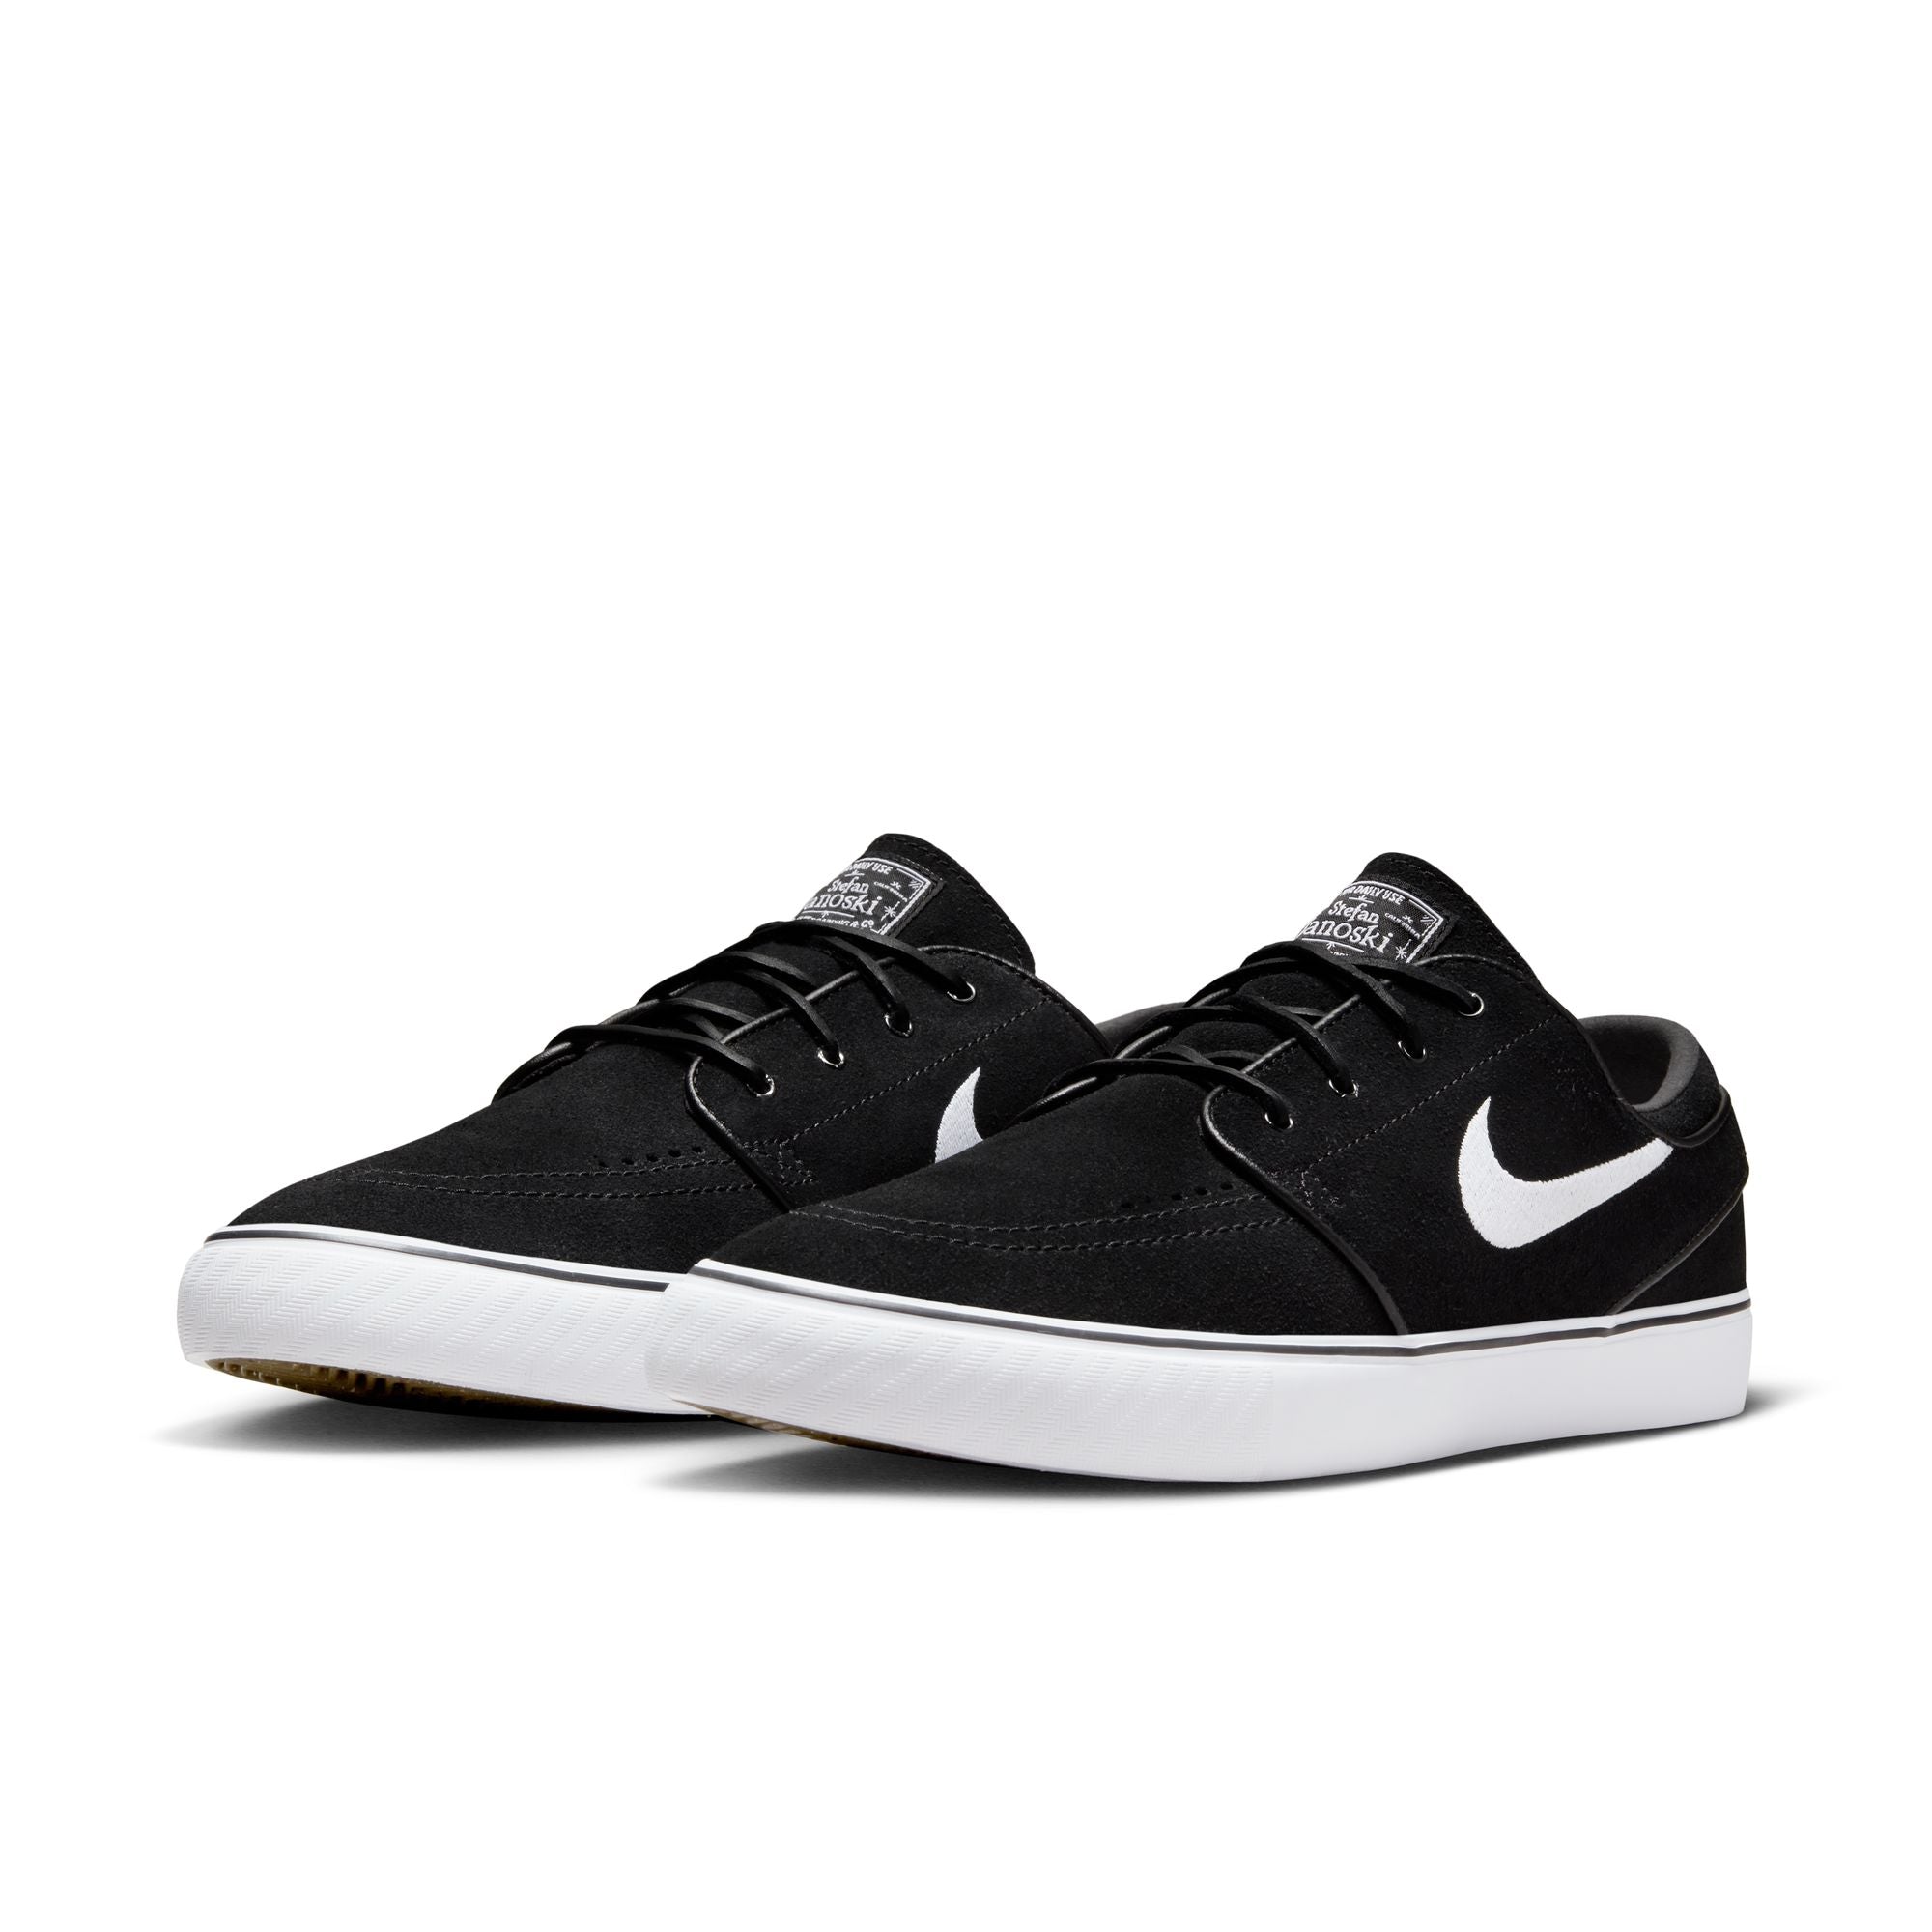 Nike SB Janoski OG+ Shoes - Black/White-Black-White